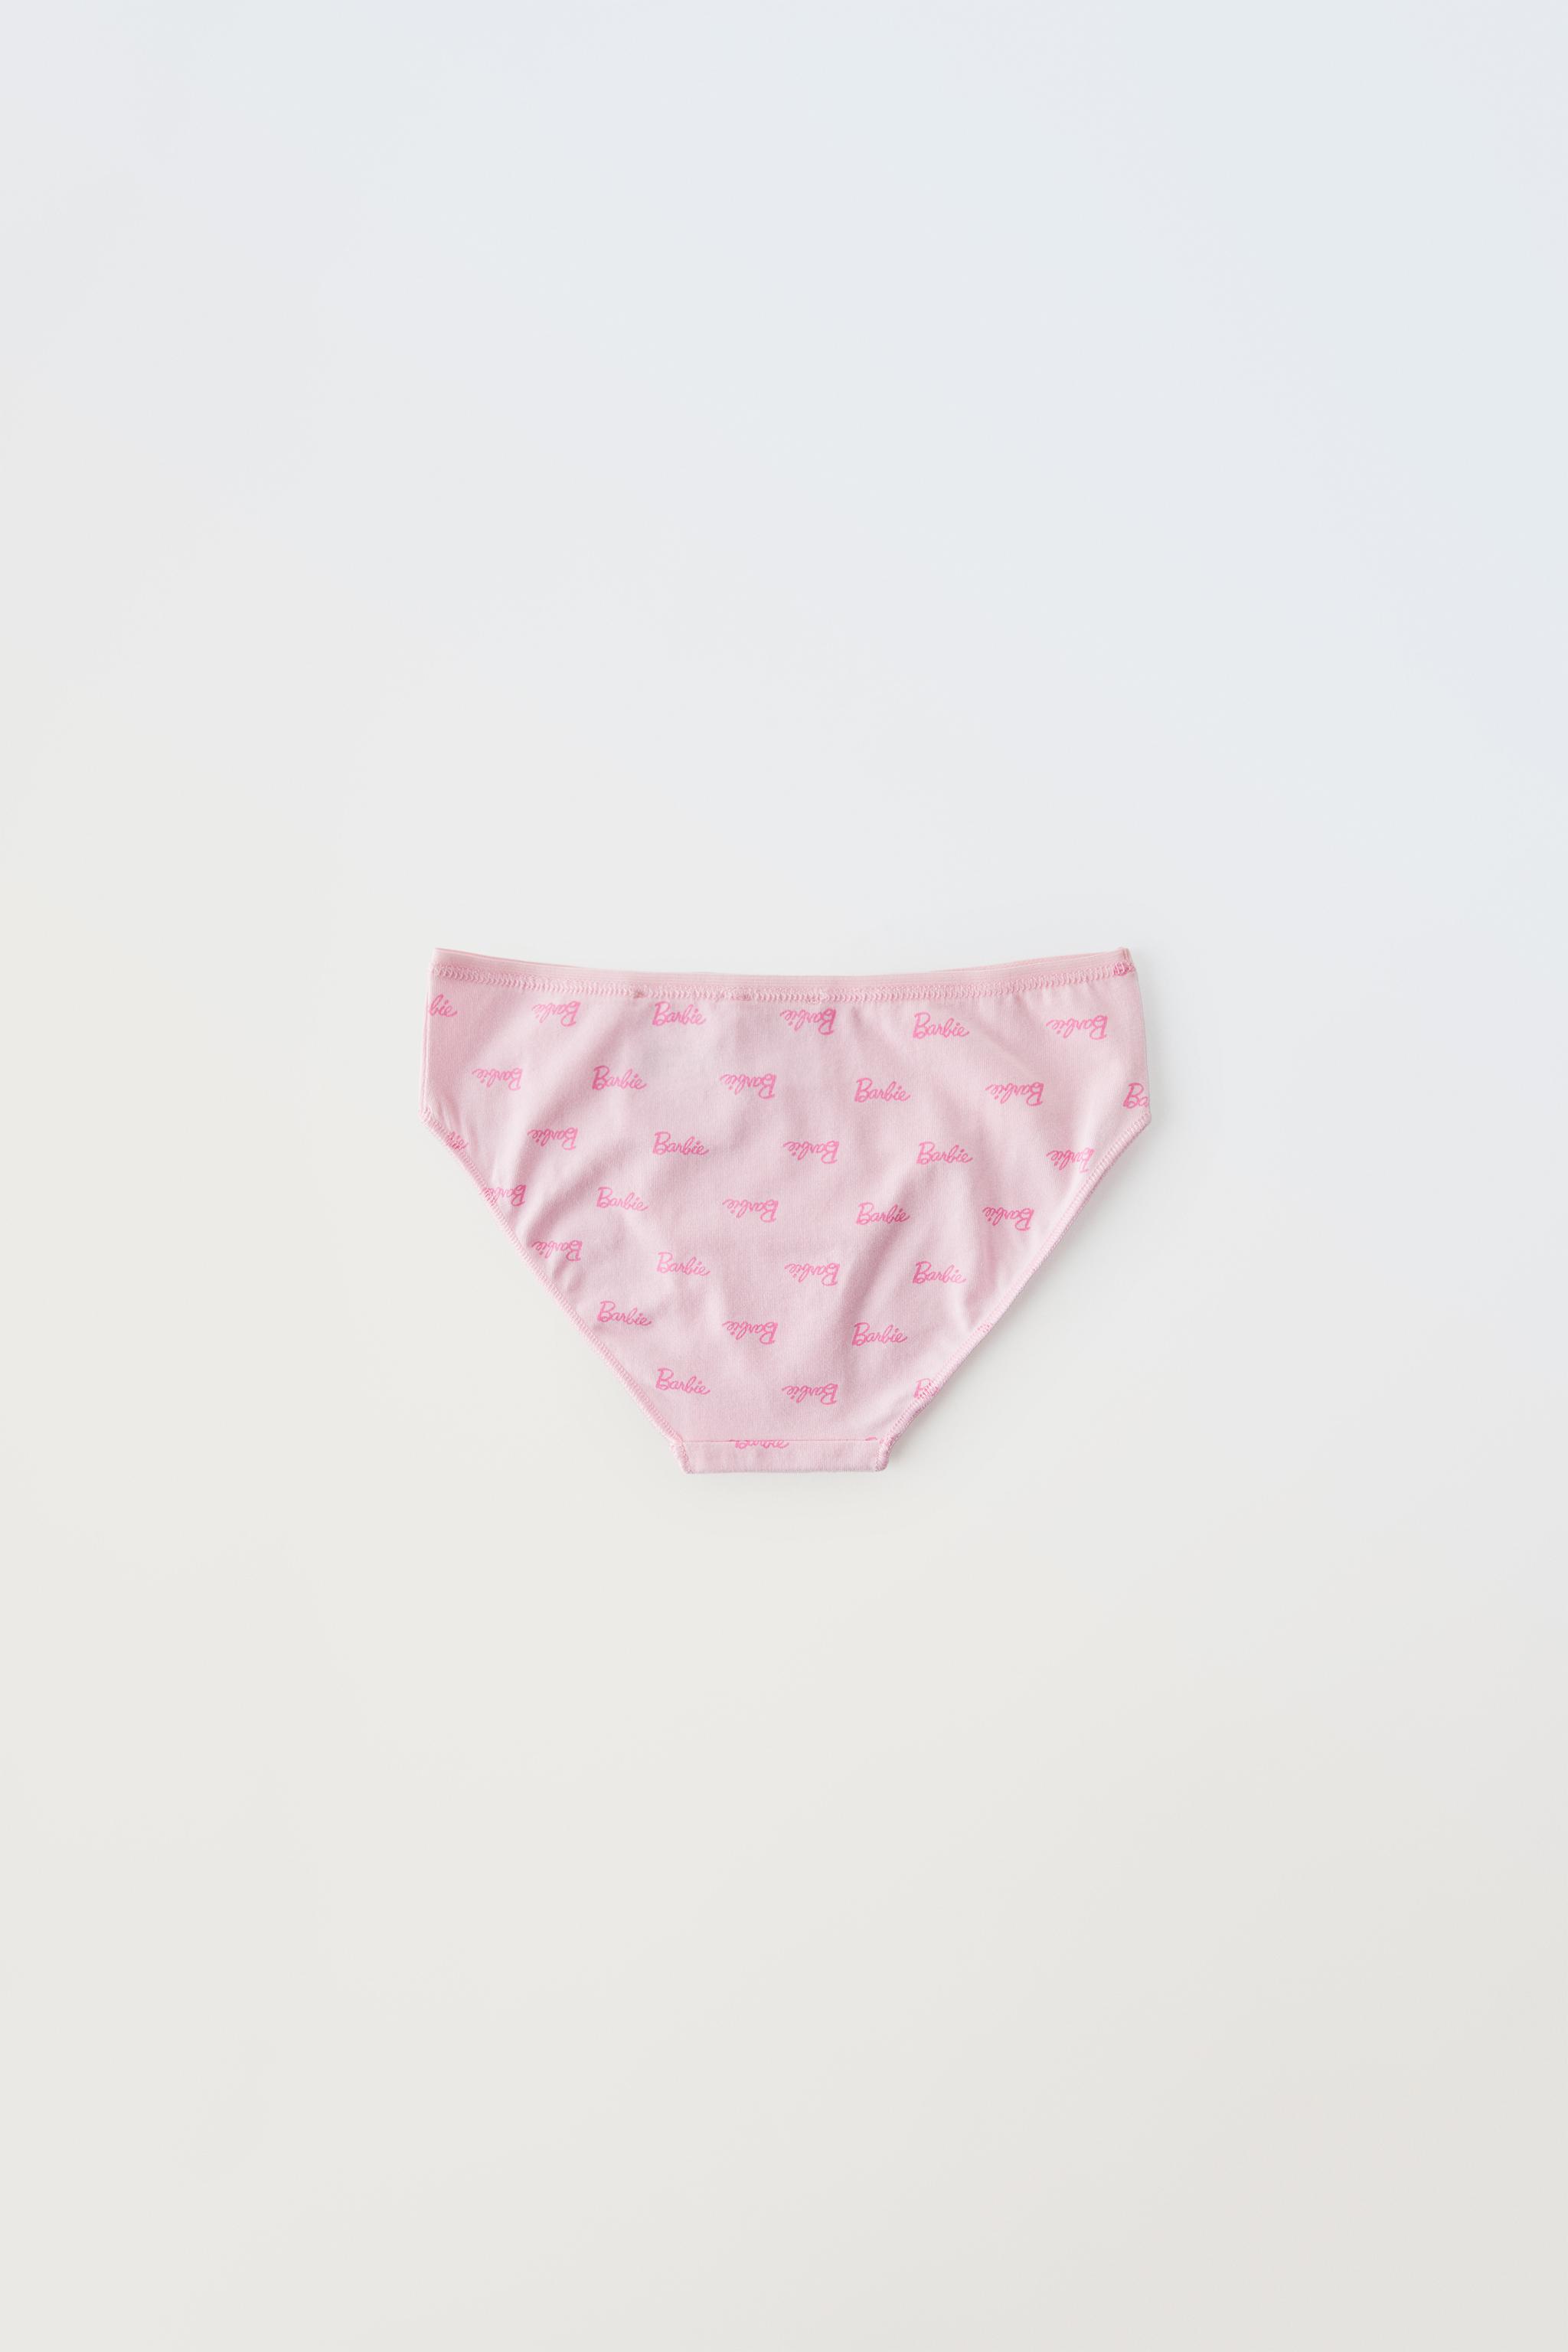 Girls Pink Cotton Boxer Kidley Panties Set For School & Seasons Sizes 3 14  Years OGU203031 From Mobeisiran, $11.74